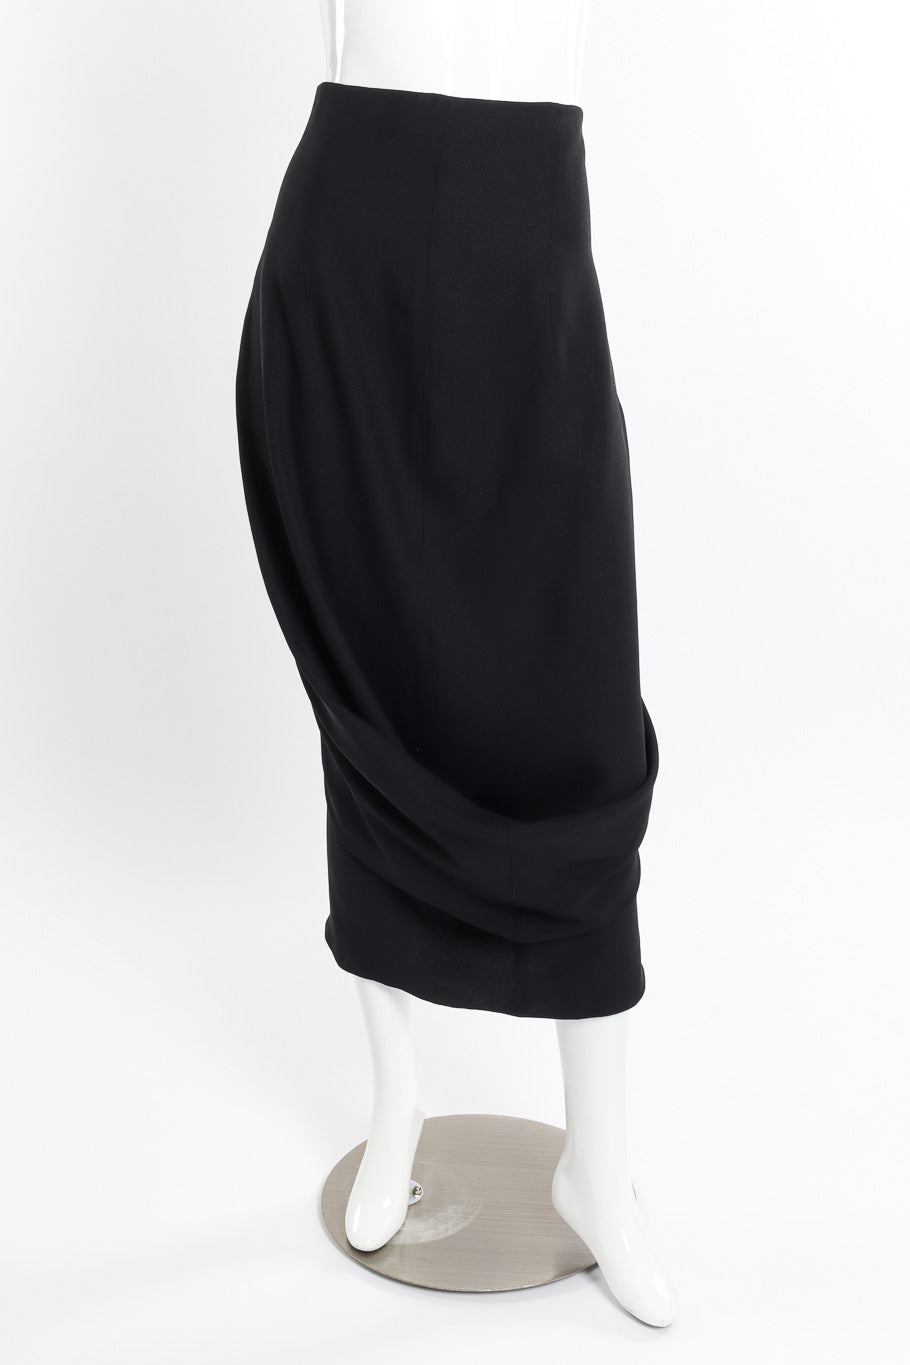 Vintage John Galliano 1999 S/S Draped Skirt front on mannequin @recessla